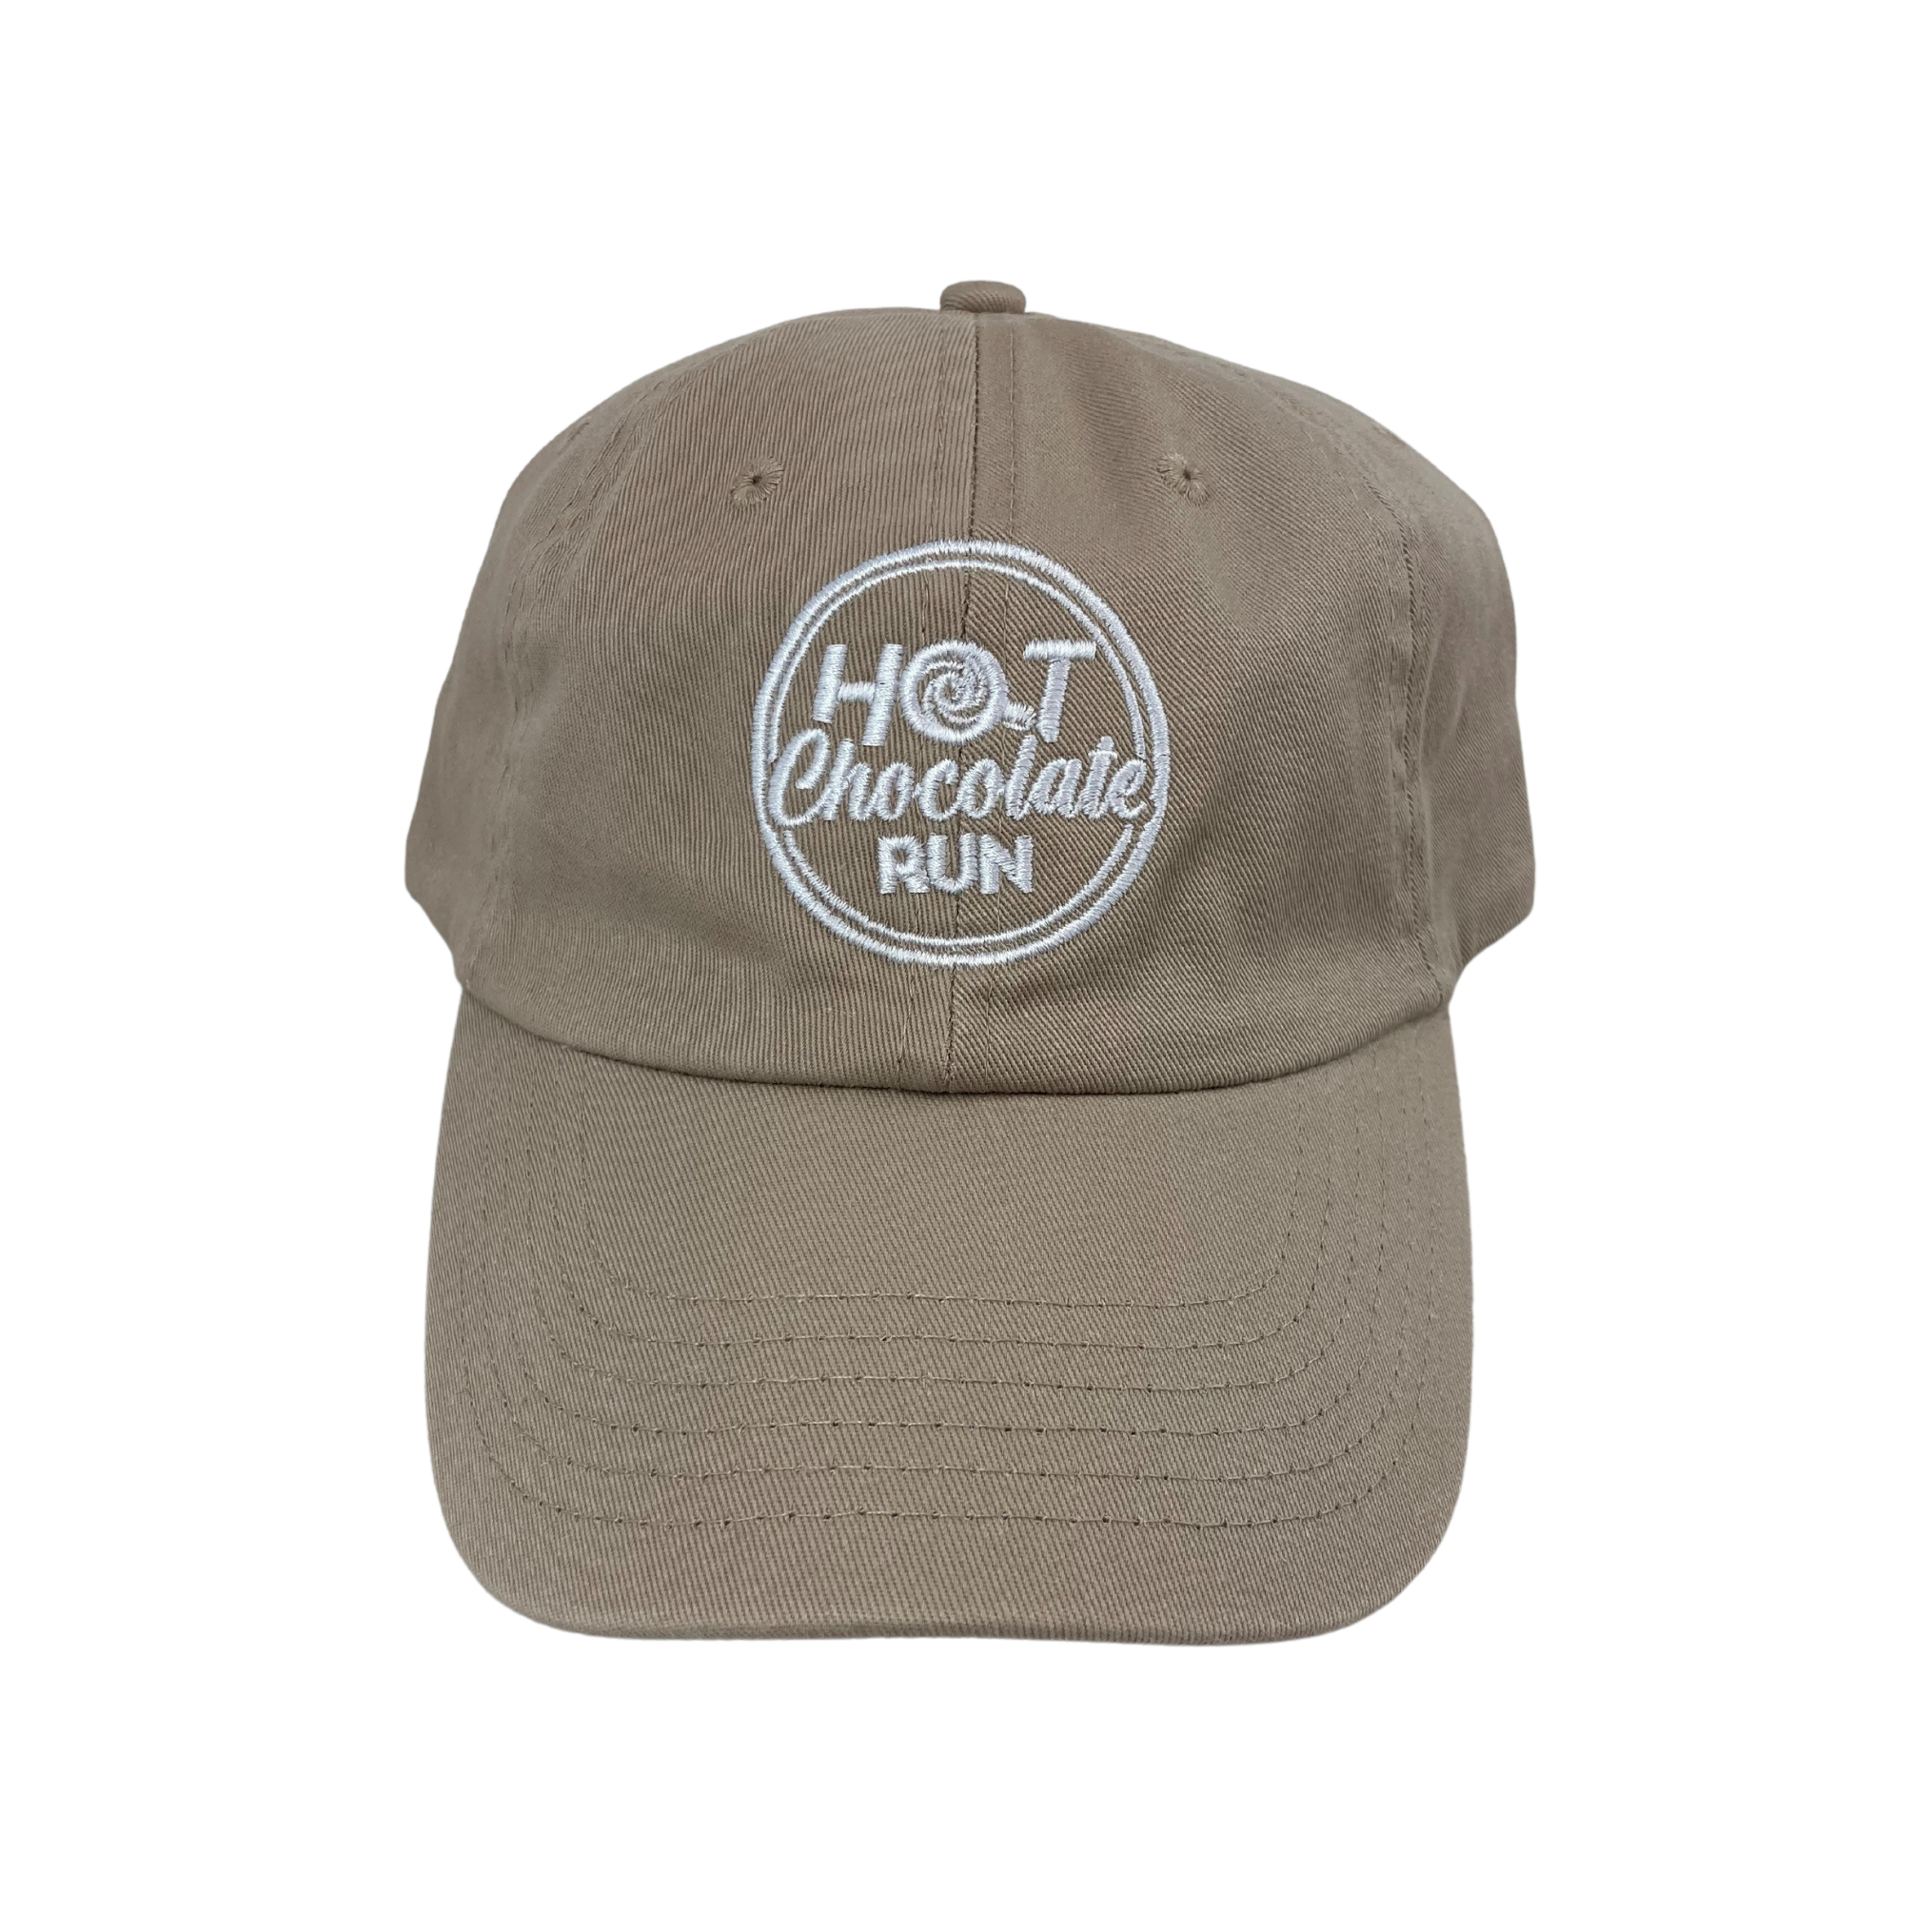 Hot Chocolate Lifestyle Hat